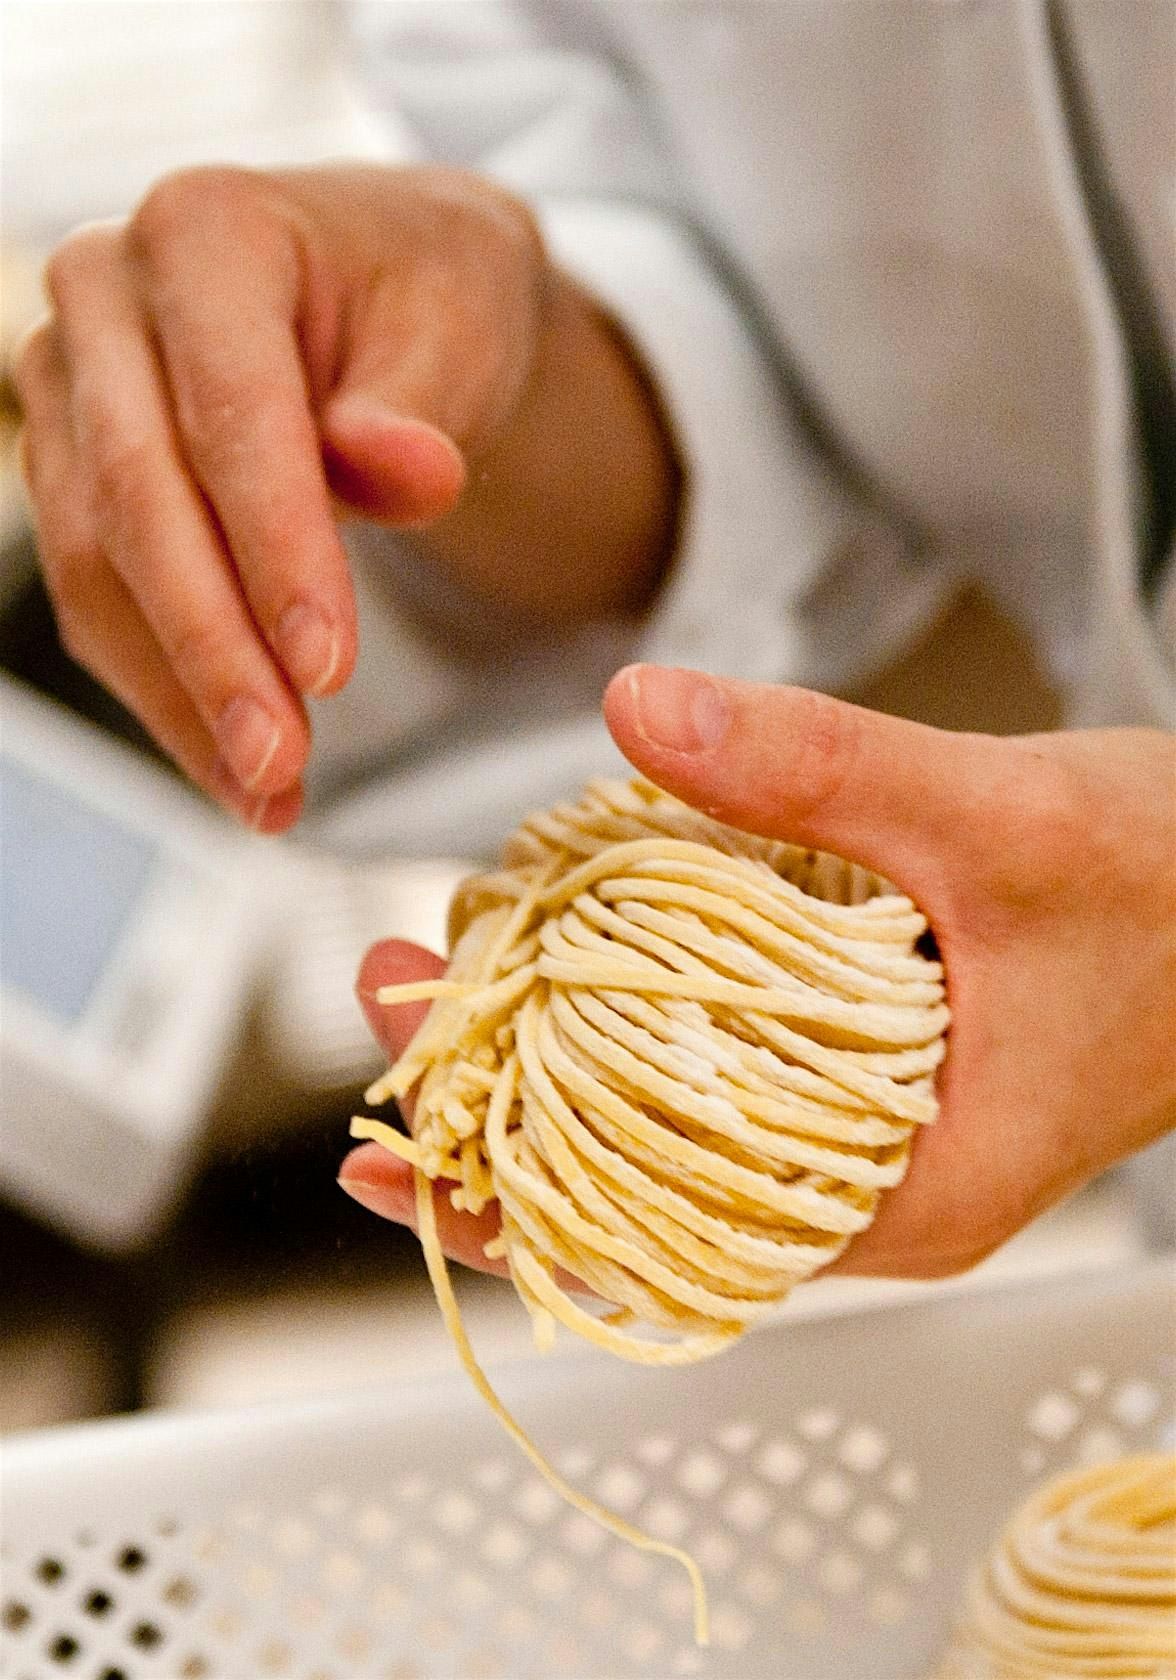 Hands-On Fresh Pasta-Making 101 Workshop at 4:30pm